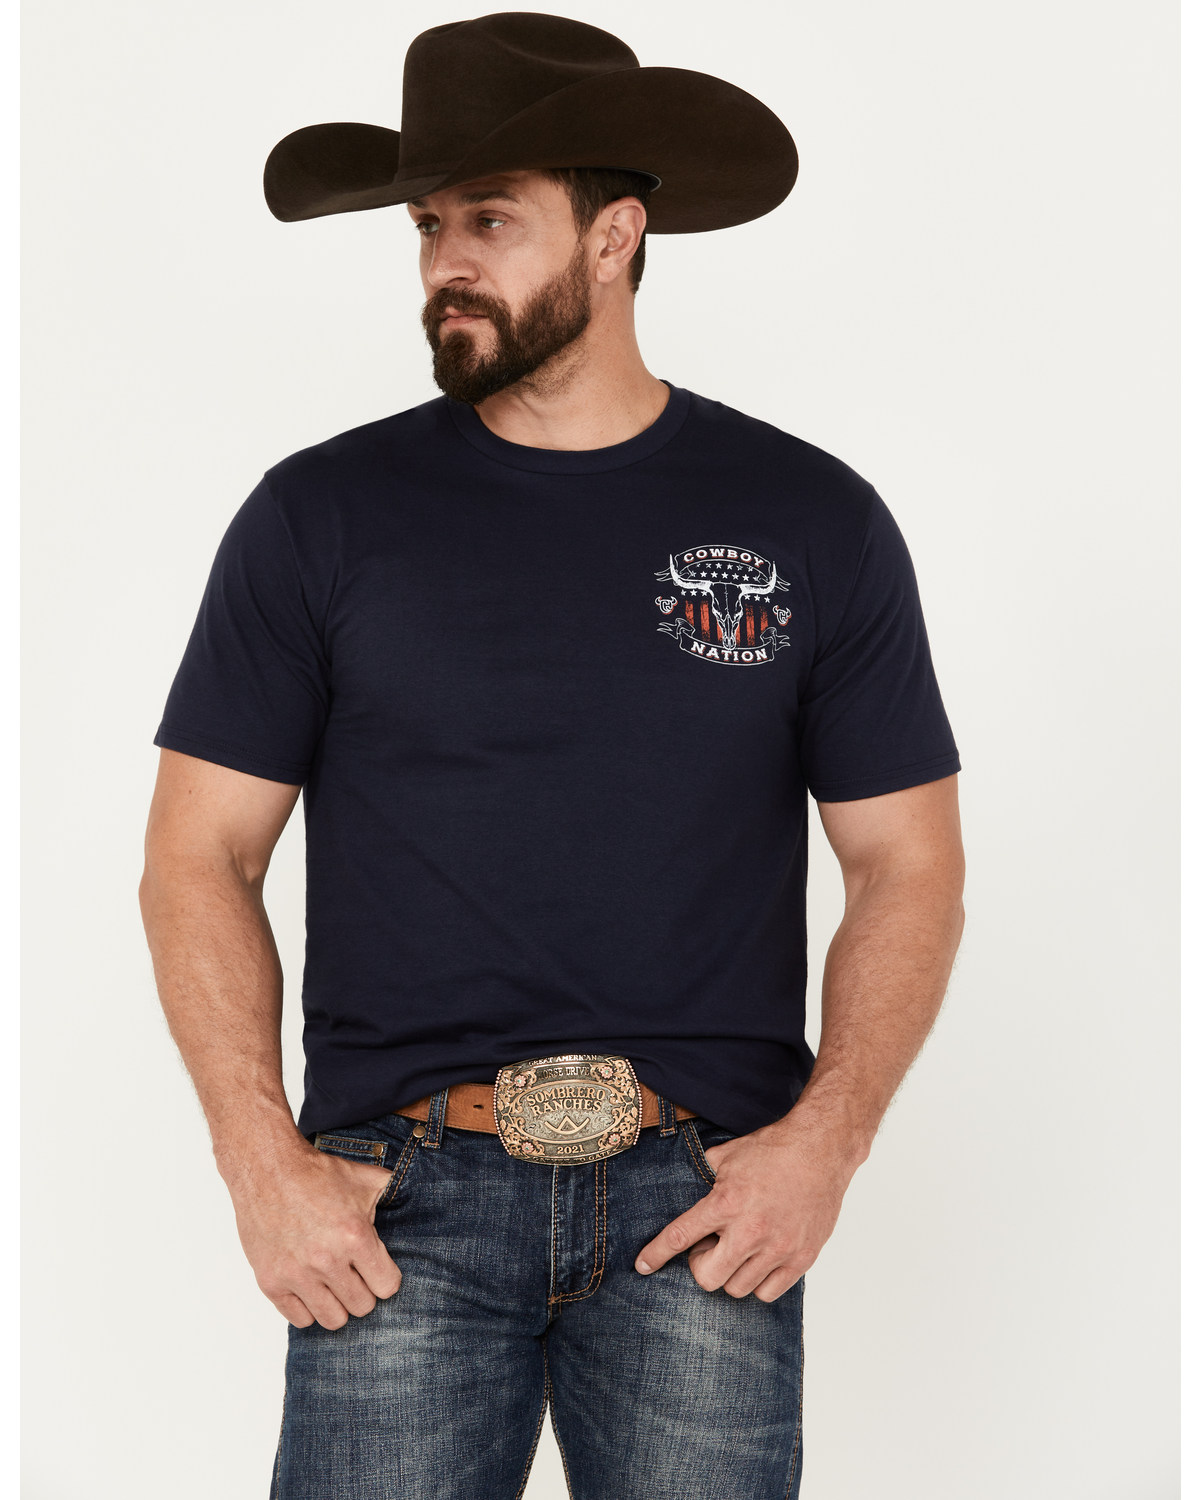 Cowboy Hardware Men's Nation Short Sleeve Graphic T-Shirt